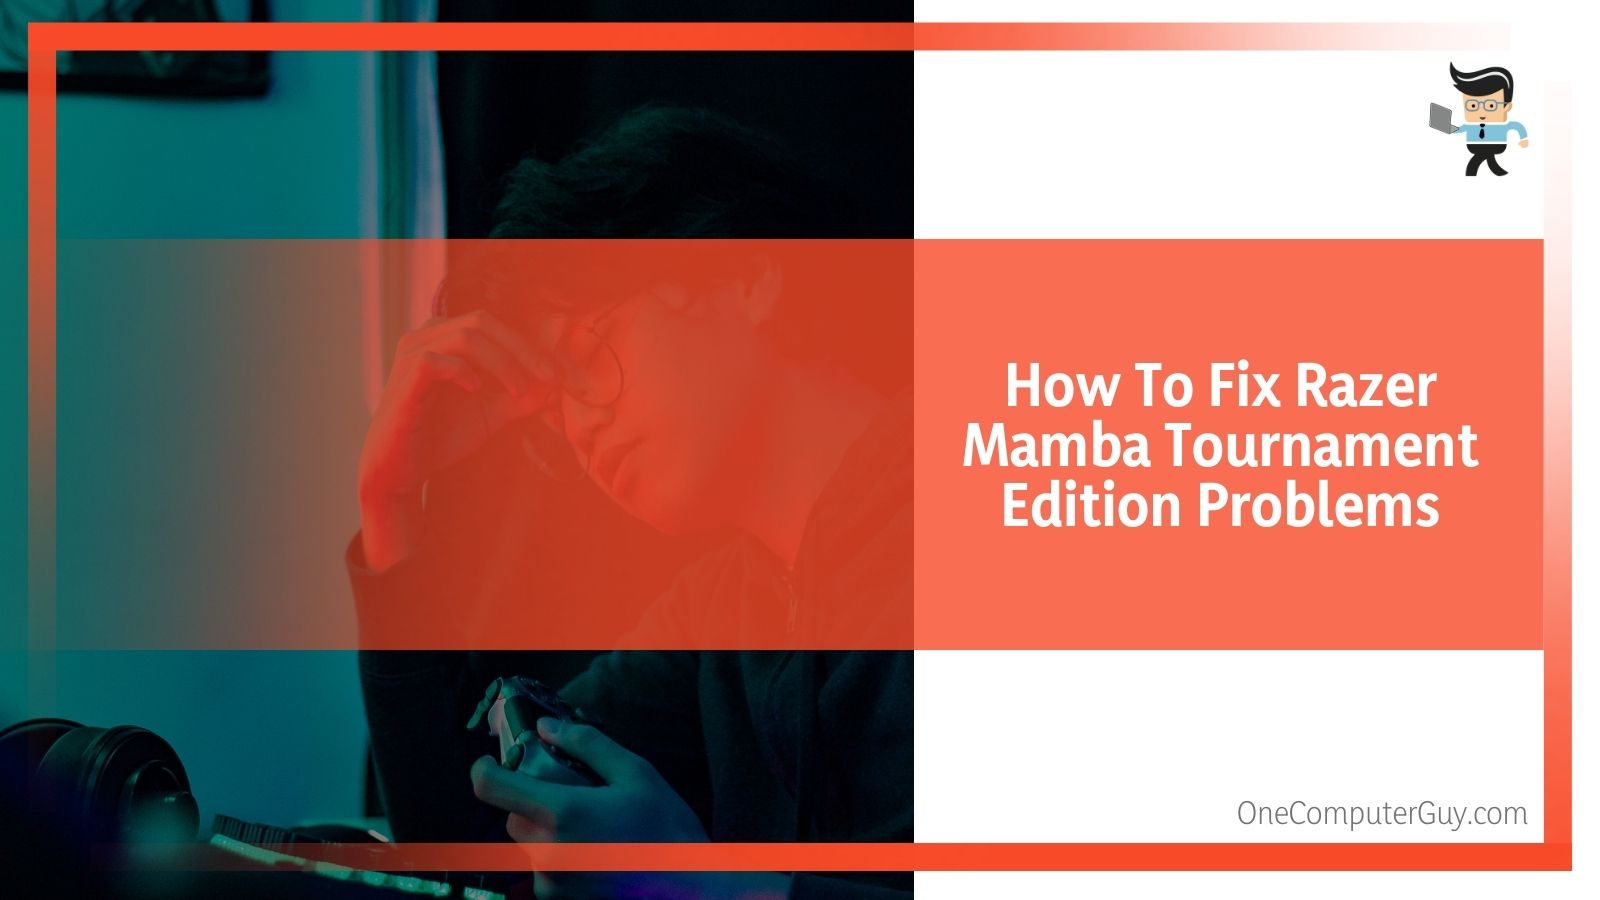 How To Fix Razer Mamba Tournament Edition Problems